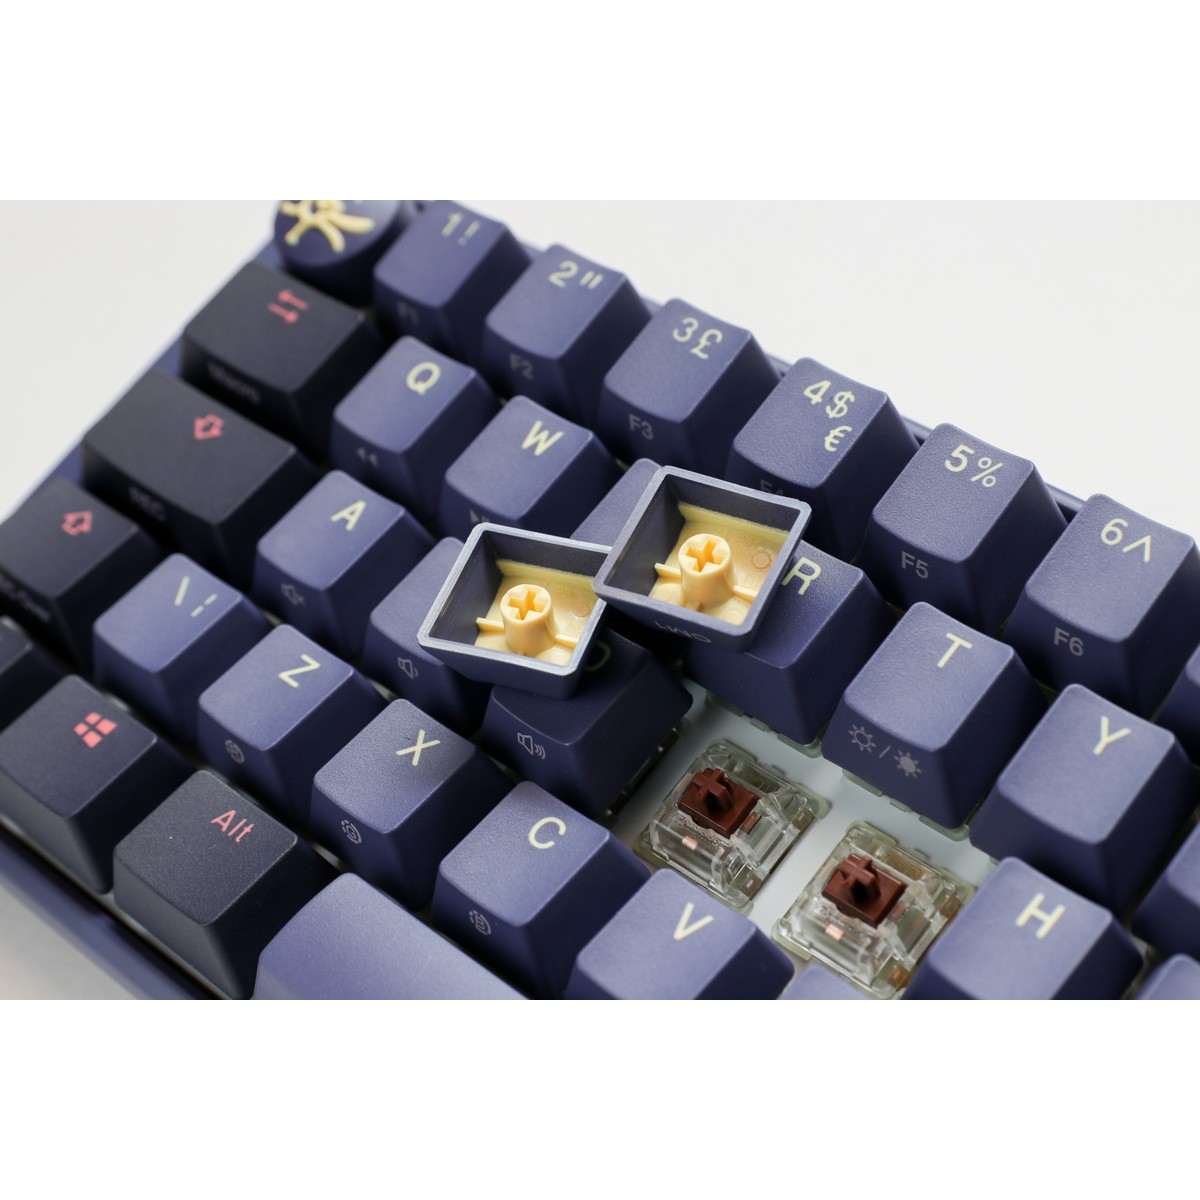 Ducky - Ducky One 3 Cosmic Mini 60% USB RGB Mechanical Gaming Keyboard Cherry MX Red Switch - UK Layout